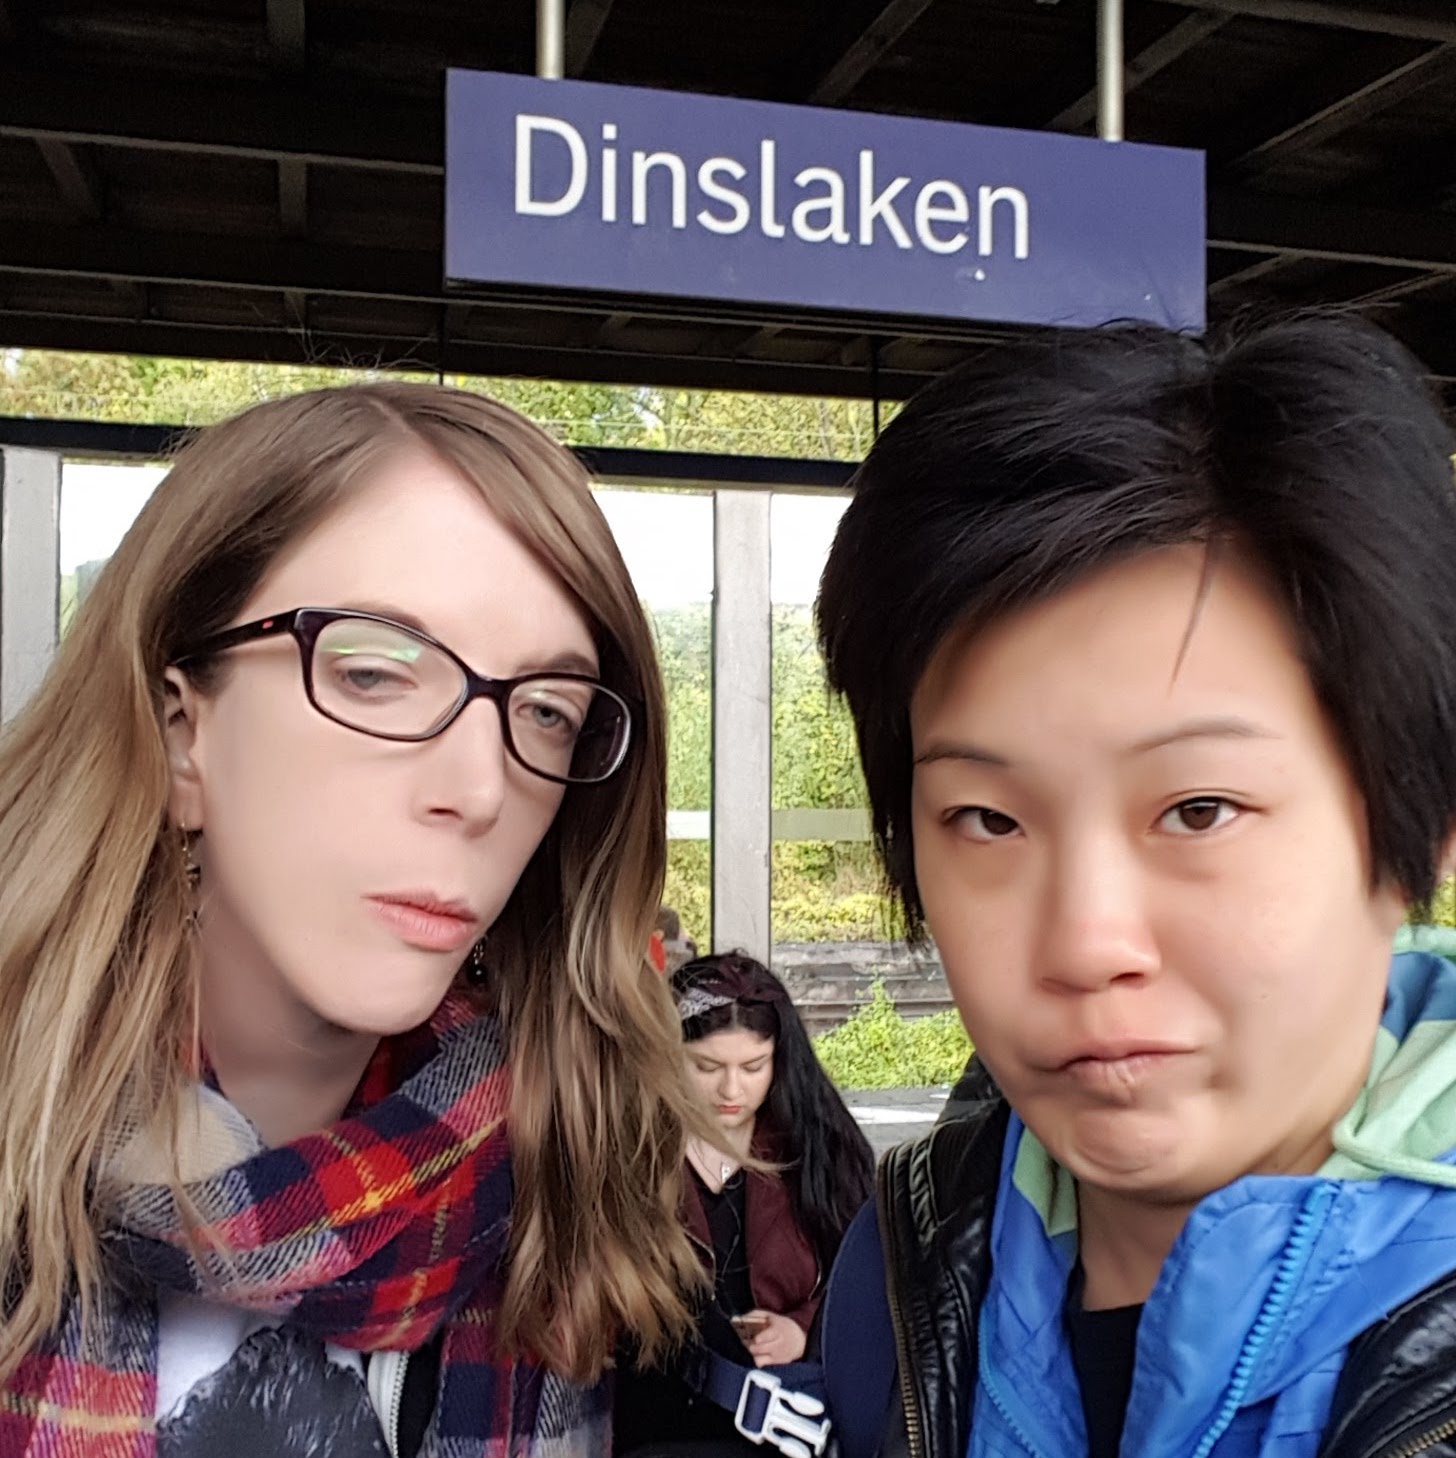 Pissed off in Dinslaken